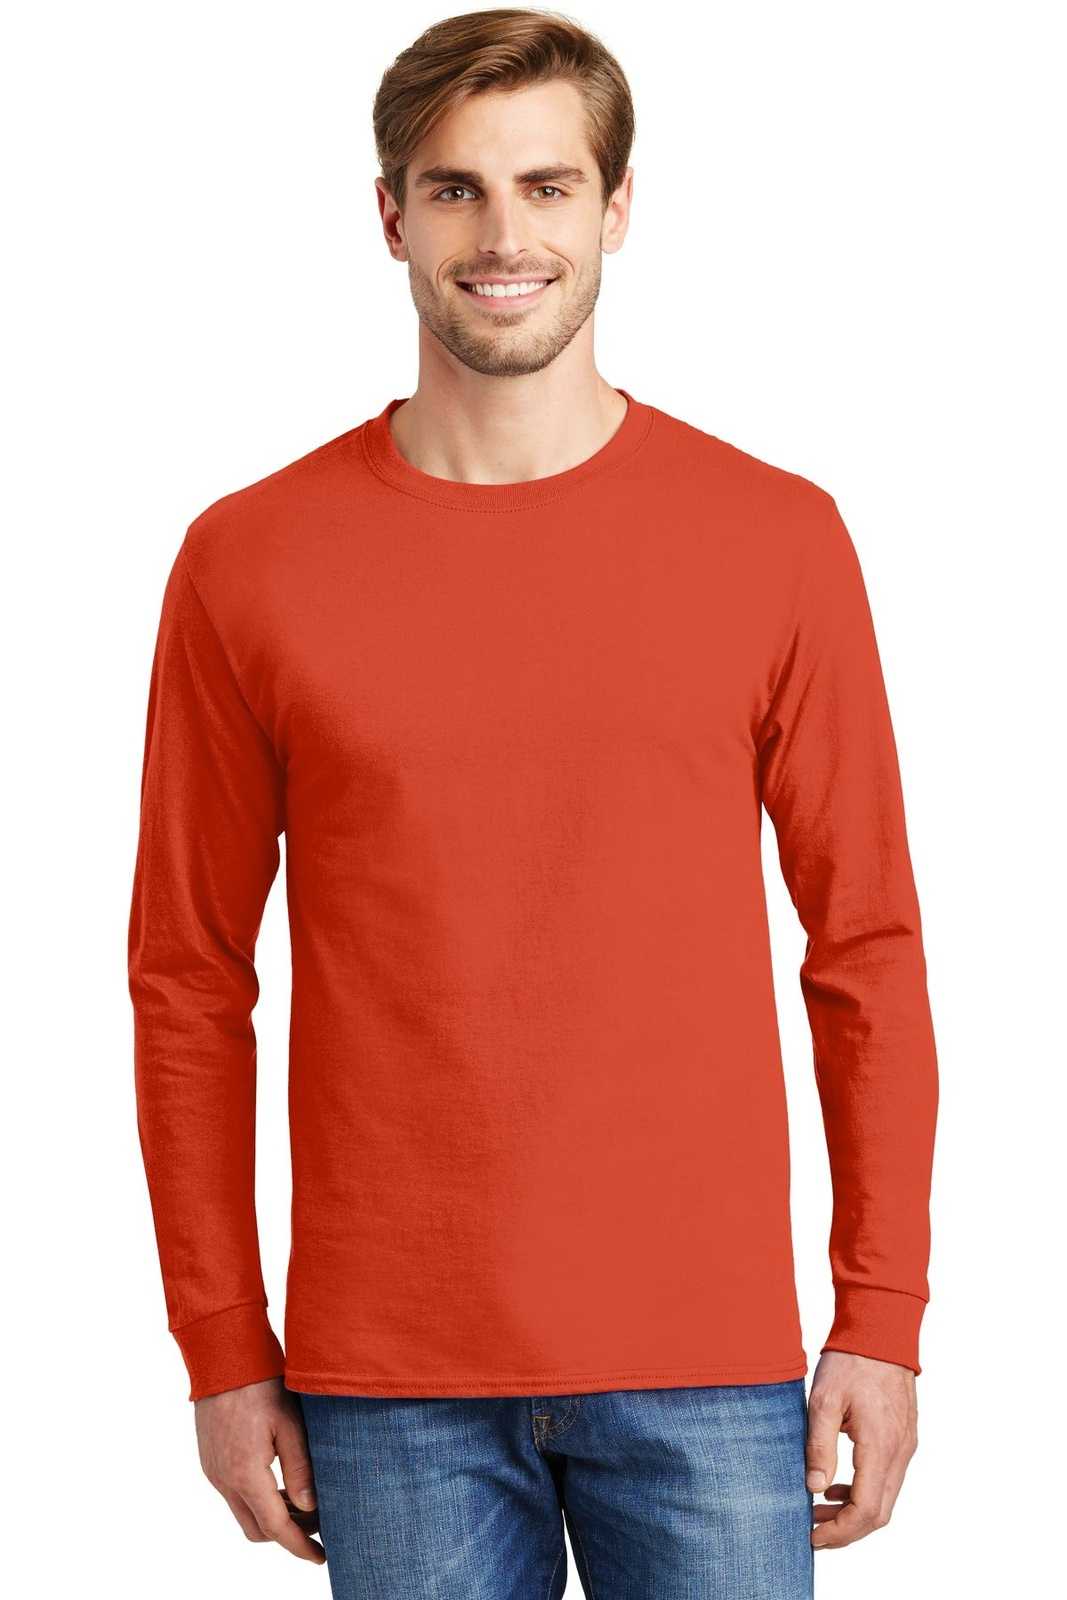 Hanes 5586 Tagless 100% Cotton Long Sleeve T-Shirt - Orange